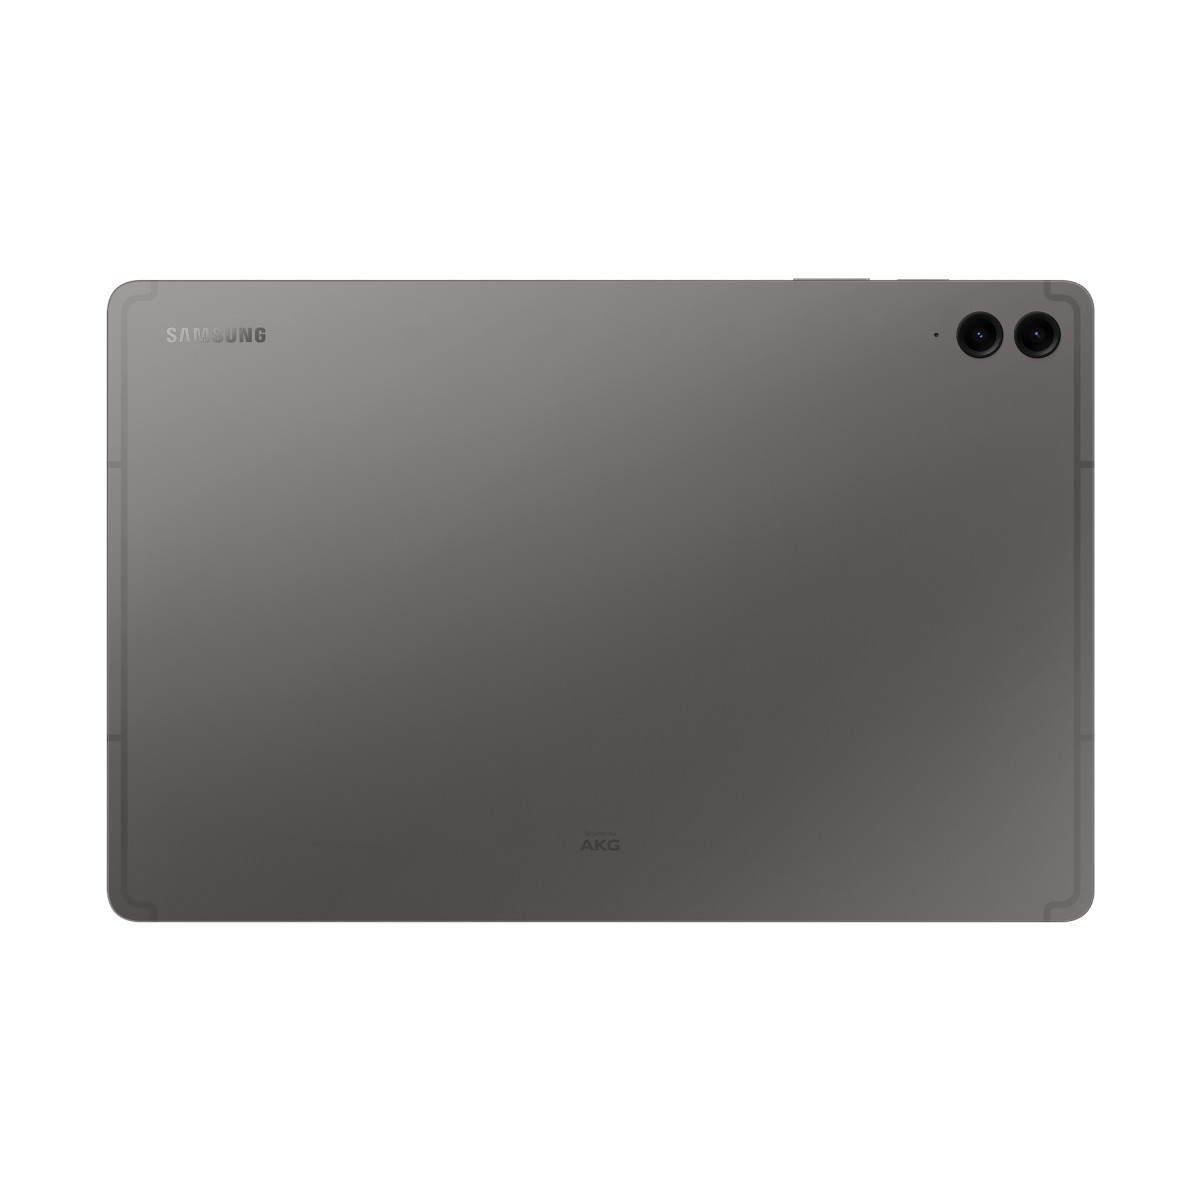 Galaxy Tab S9 FE+ 128GB Gray 5G